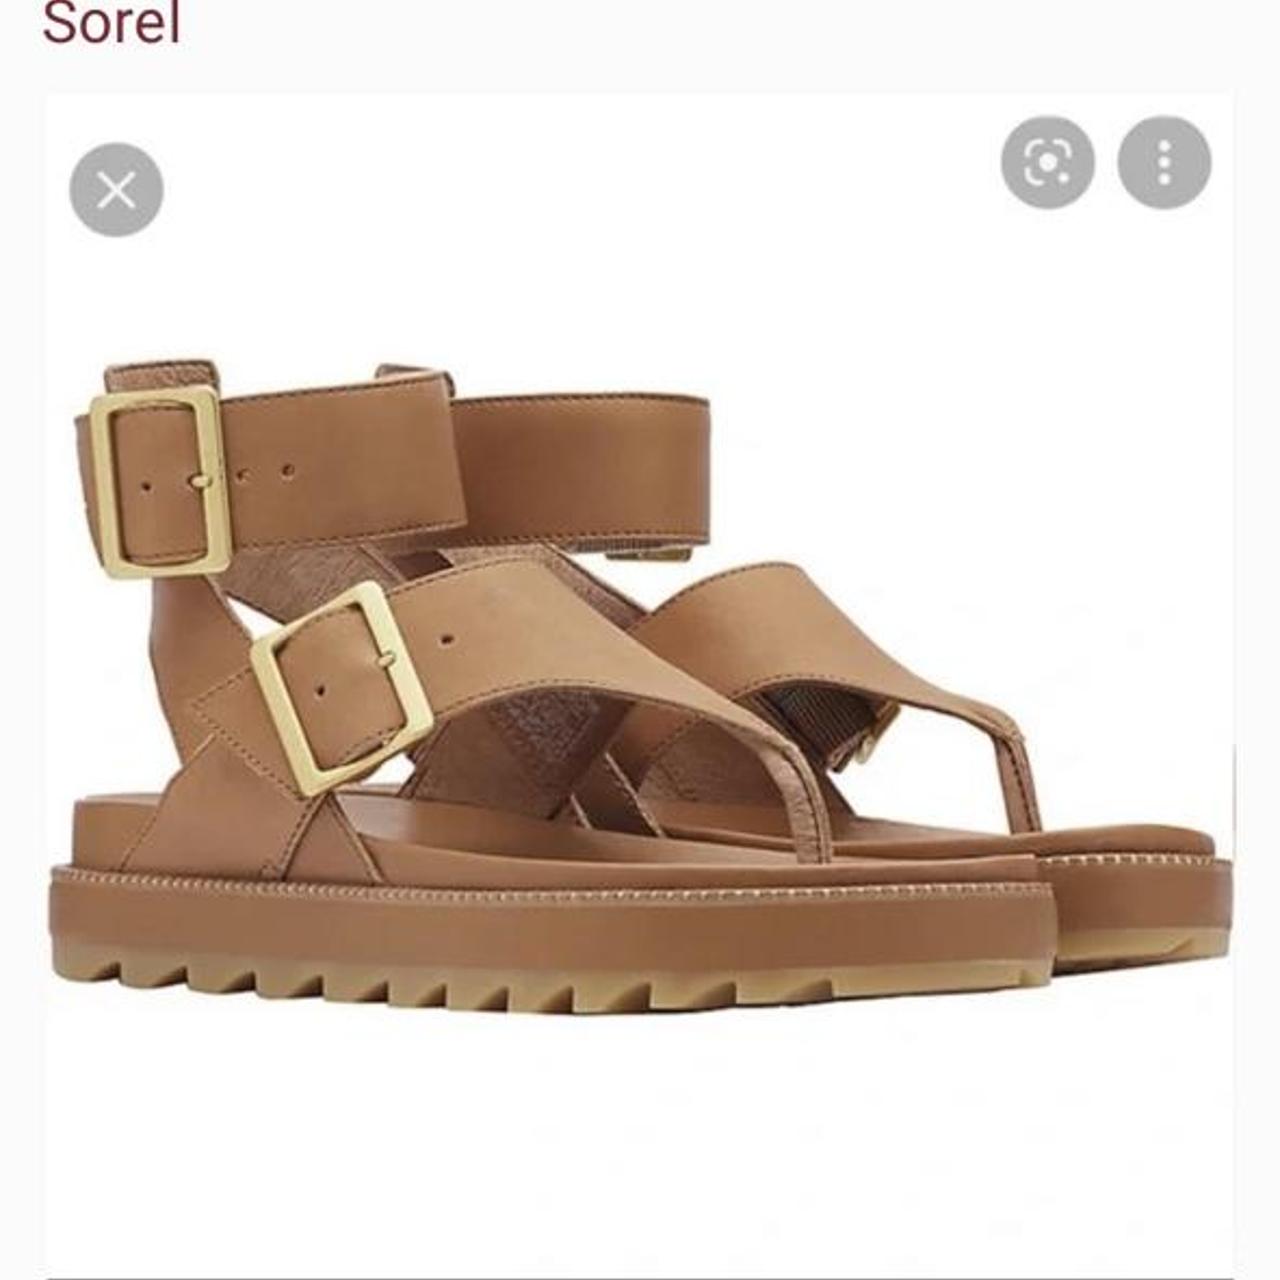 Sorel Women's Tan and Gold Sandals